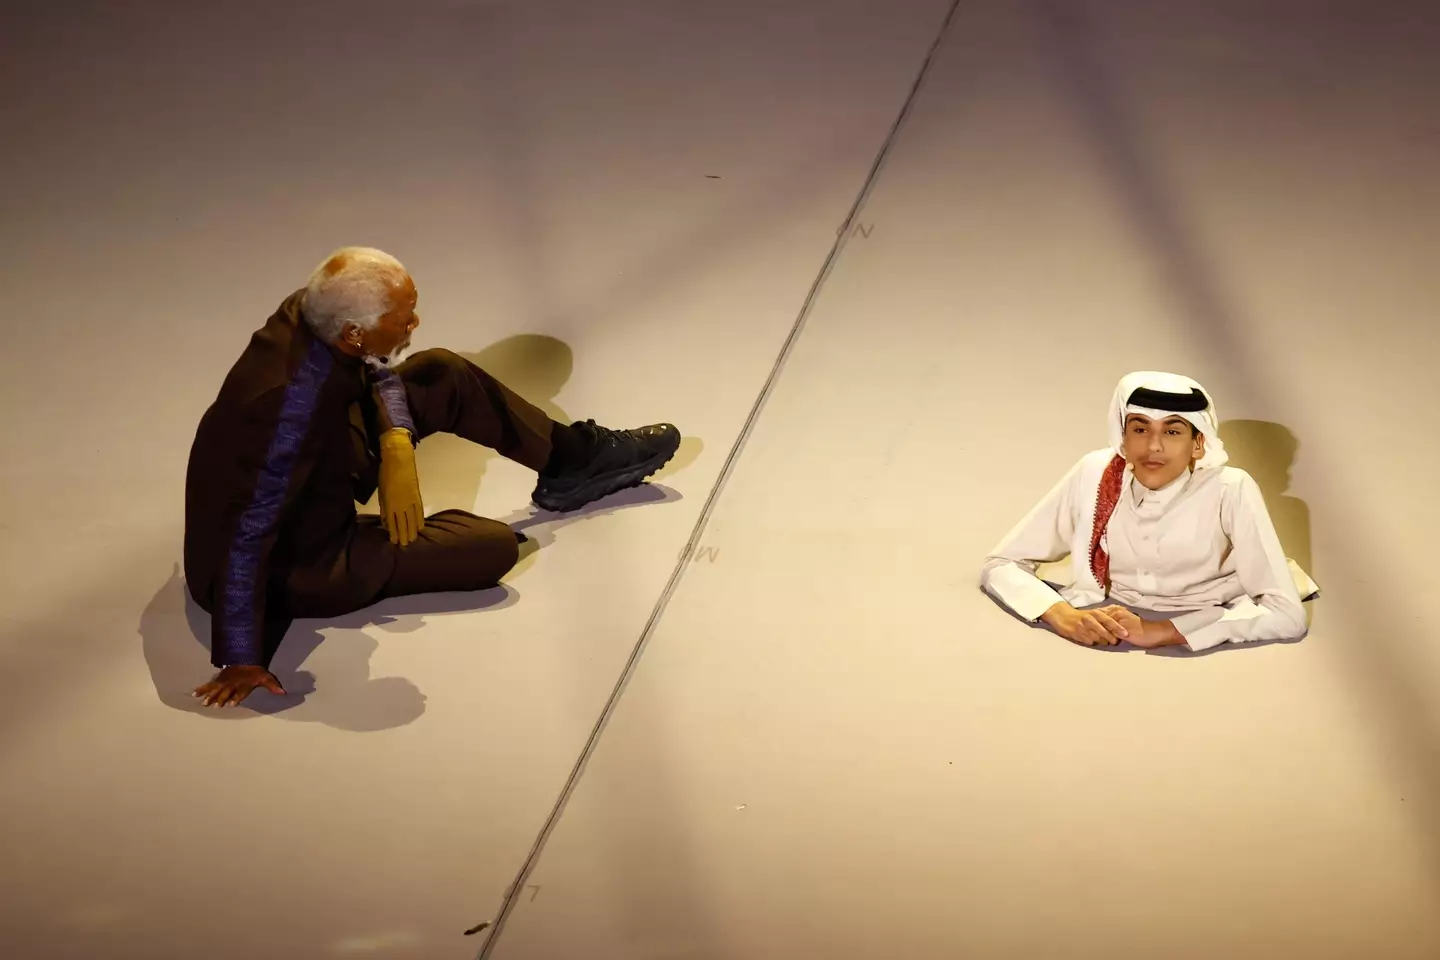 Morgan Freeman appeared on stage alongside Qatari YouTuber Ghanim al-Muftah.